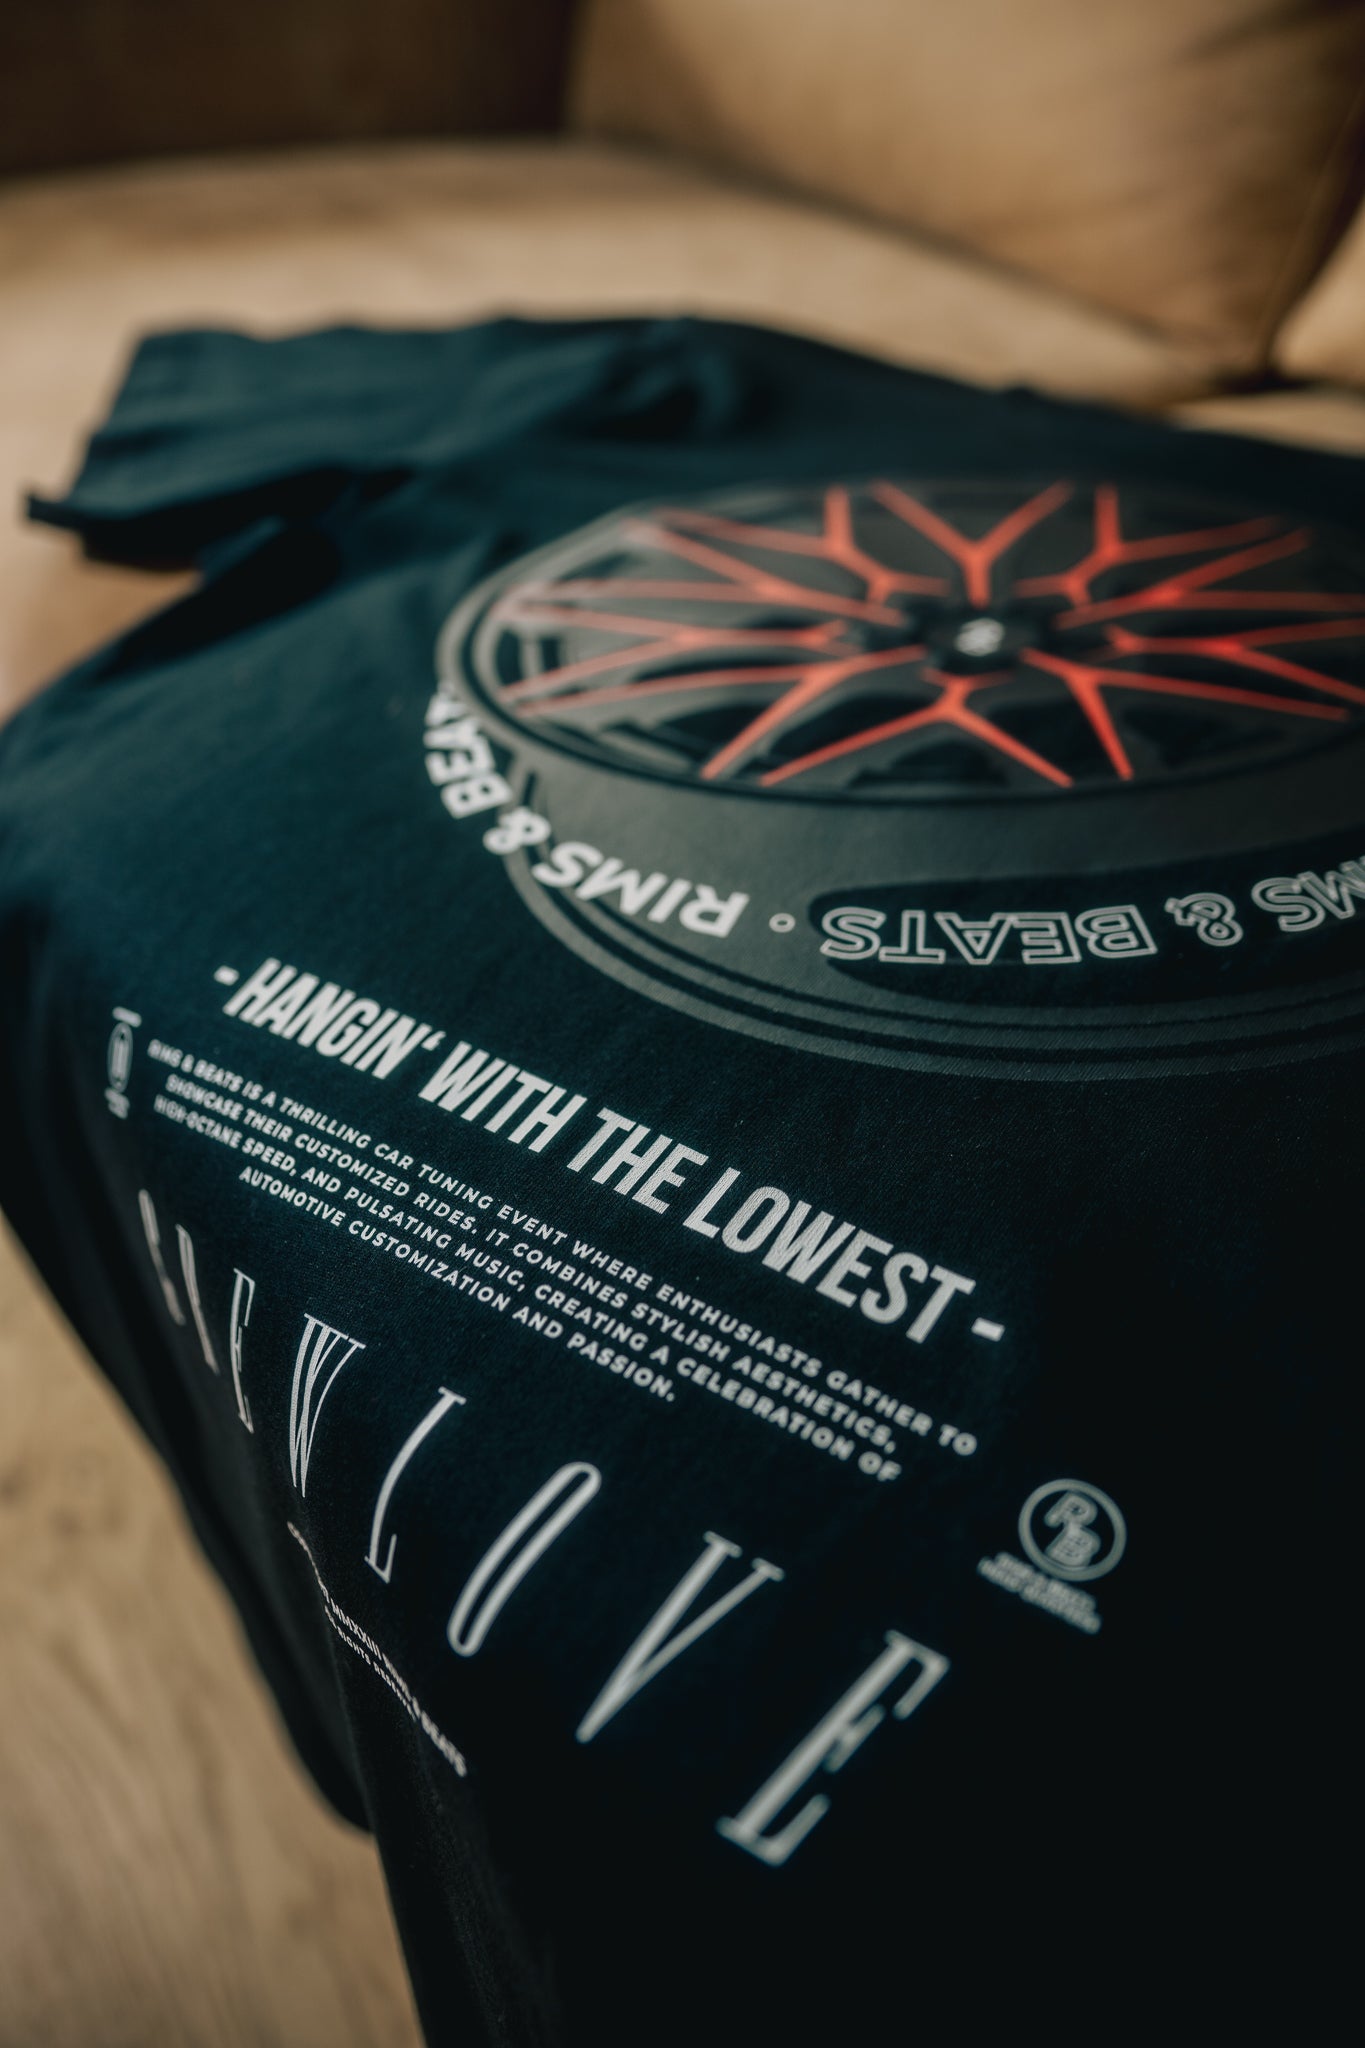 Rims & Beats Crewlove T-Shirt Limited Edition